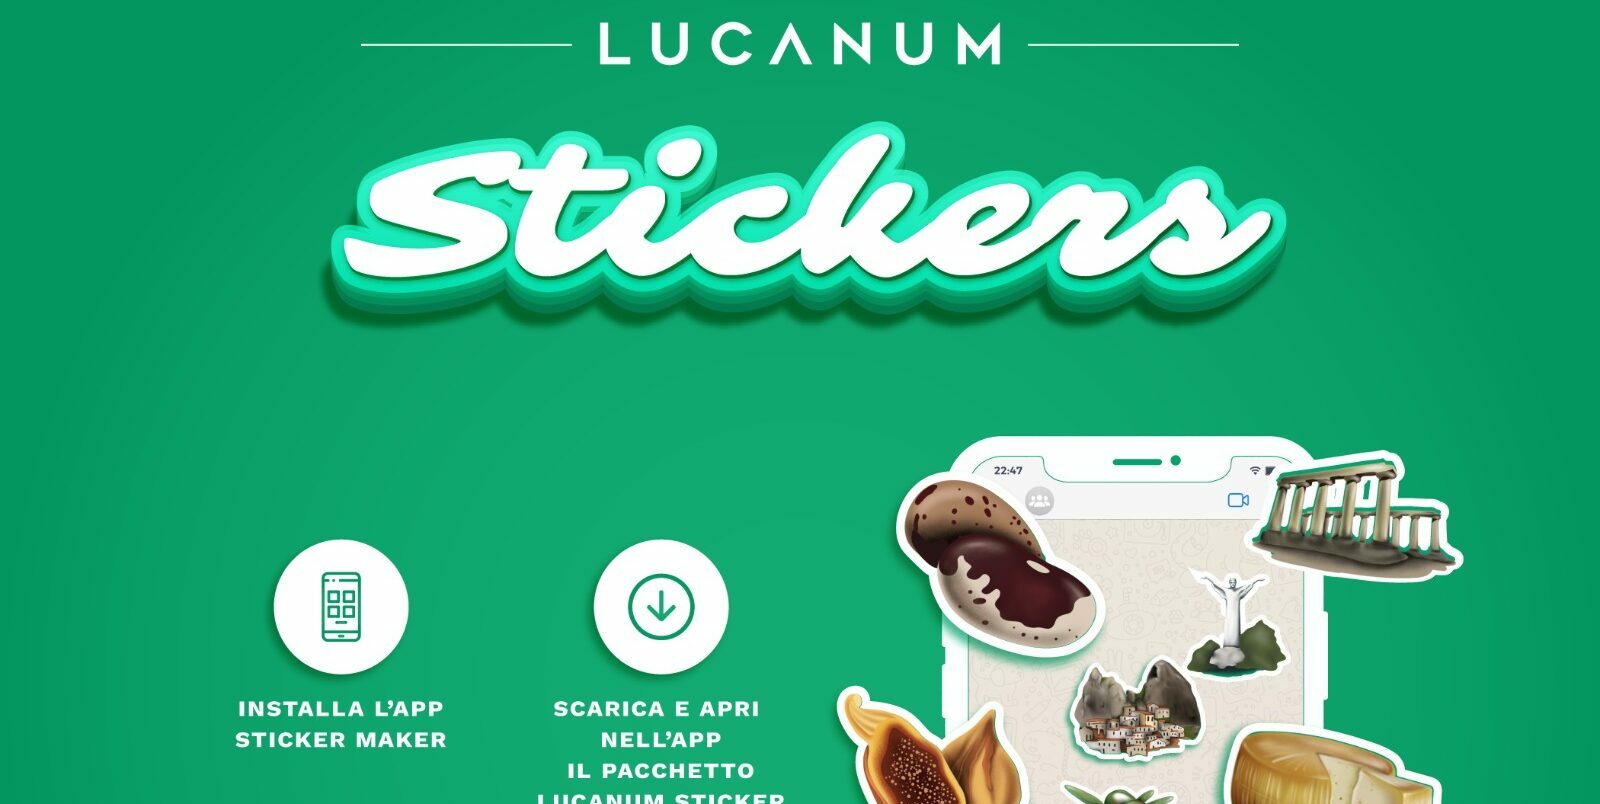 Ecco i Lucanum Stickers per conversare digitalmente alla lucana